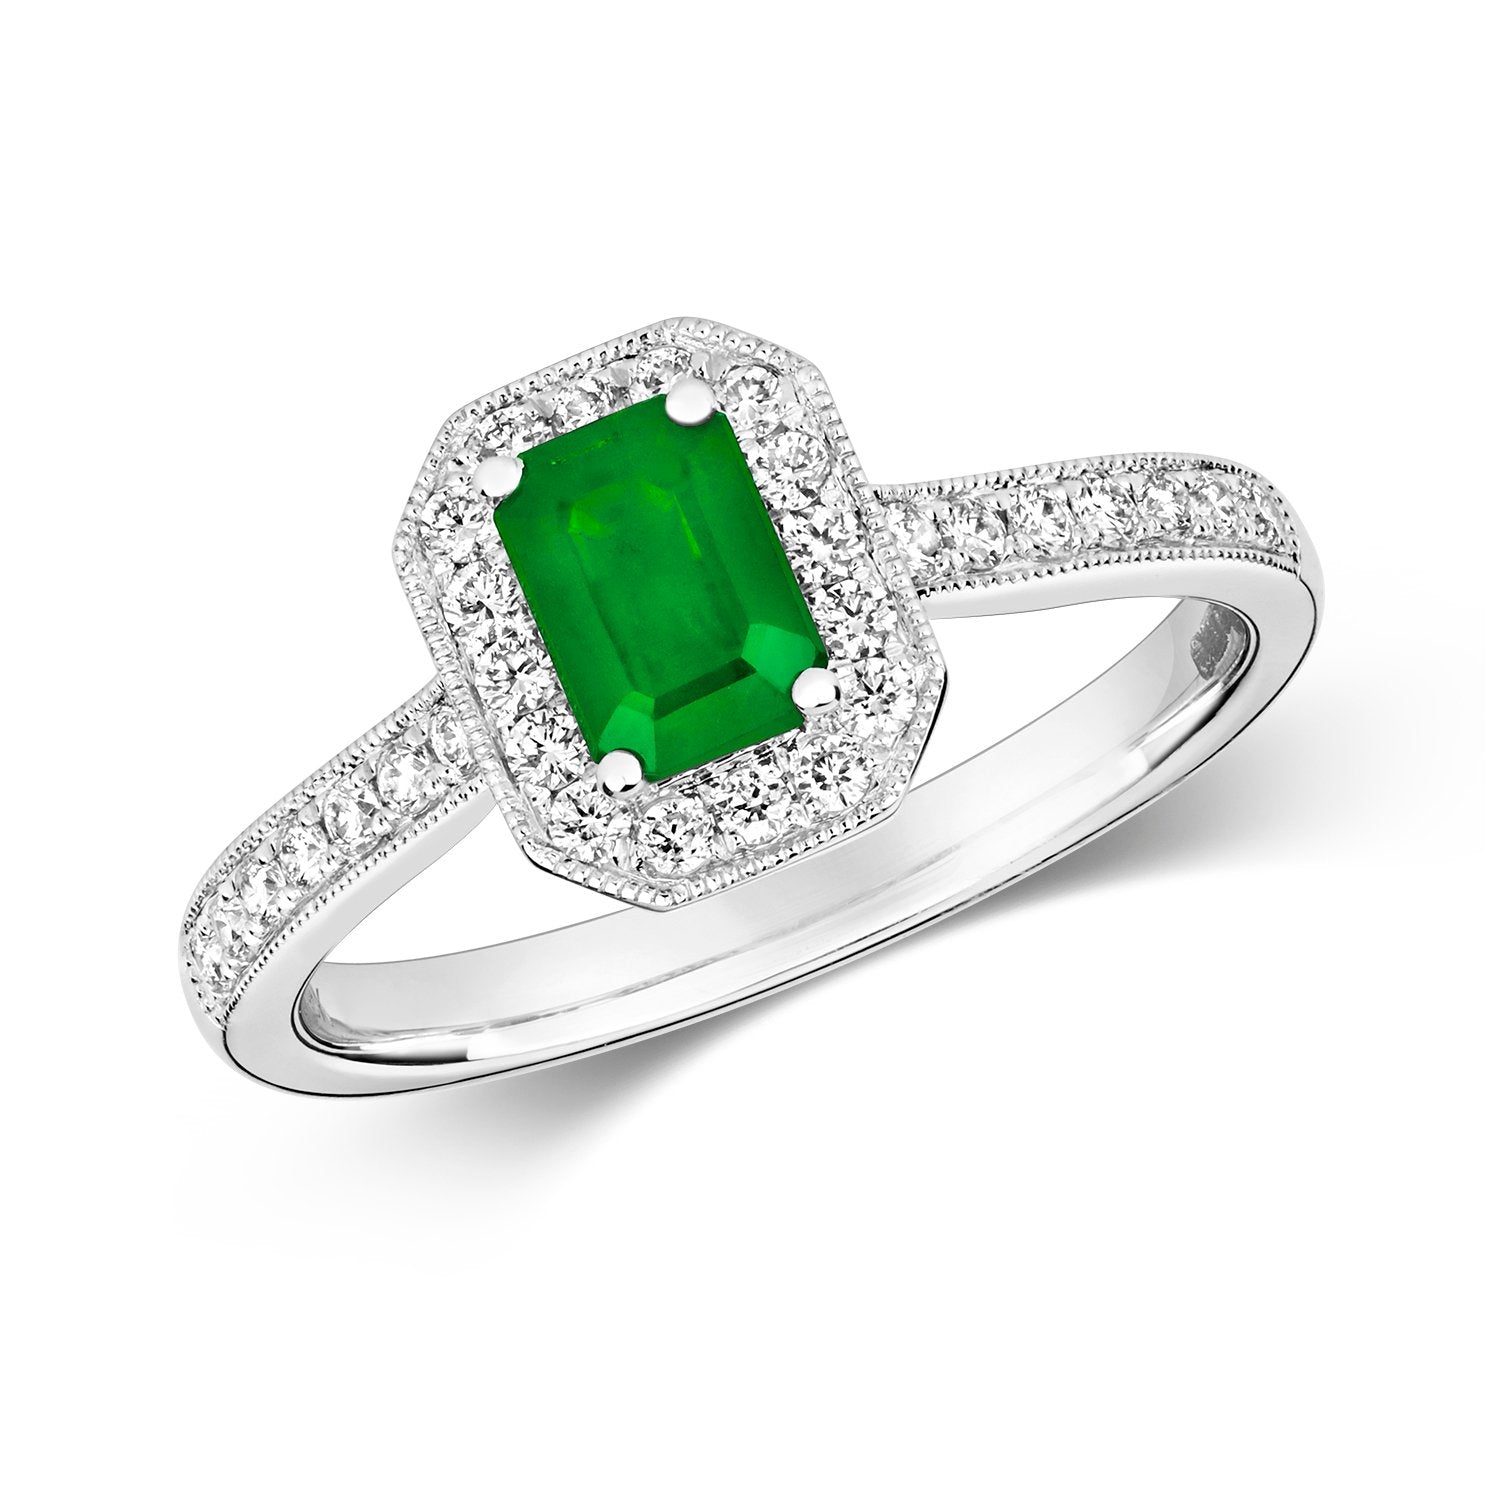 Emerald & Diamond Octagon Ring (Rd415we)